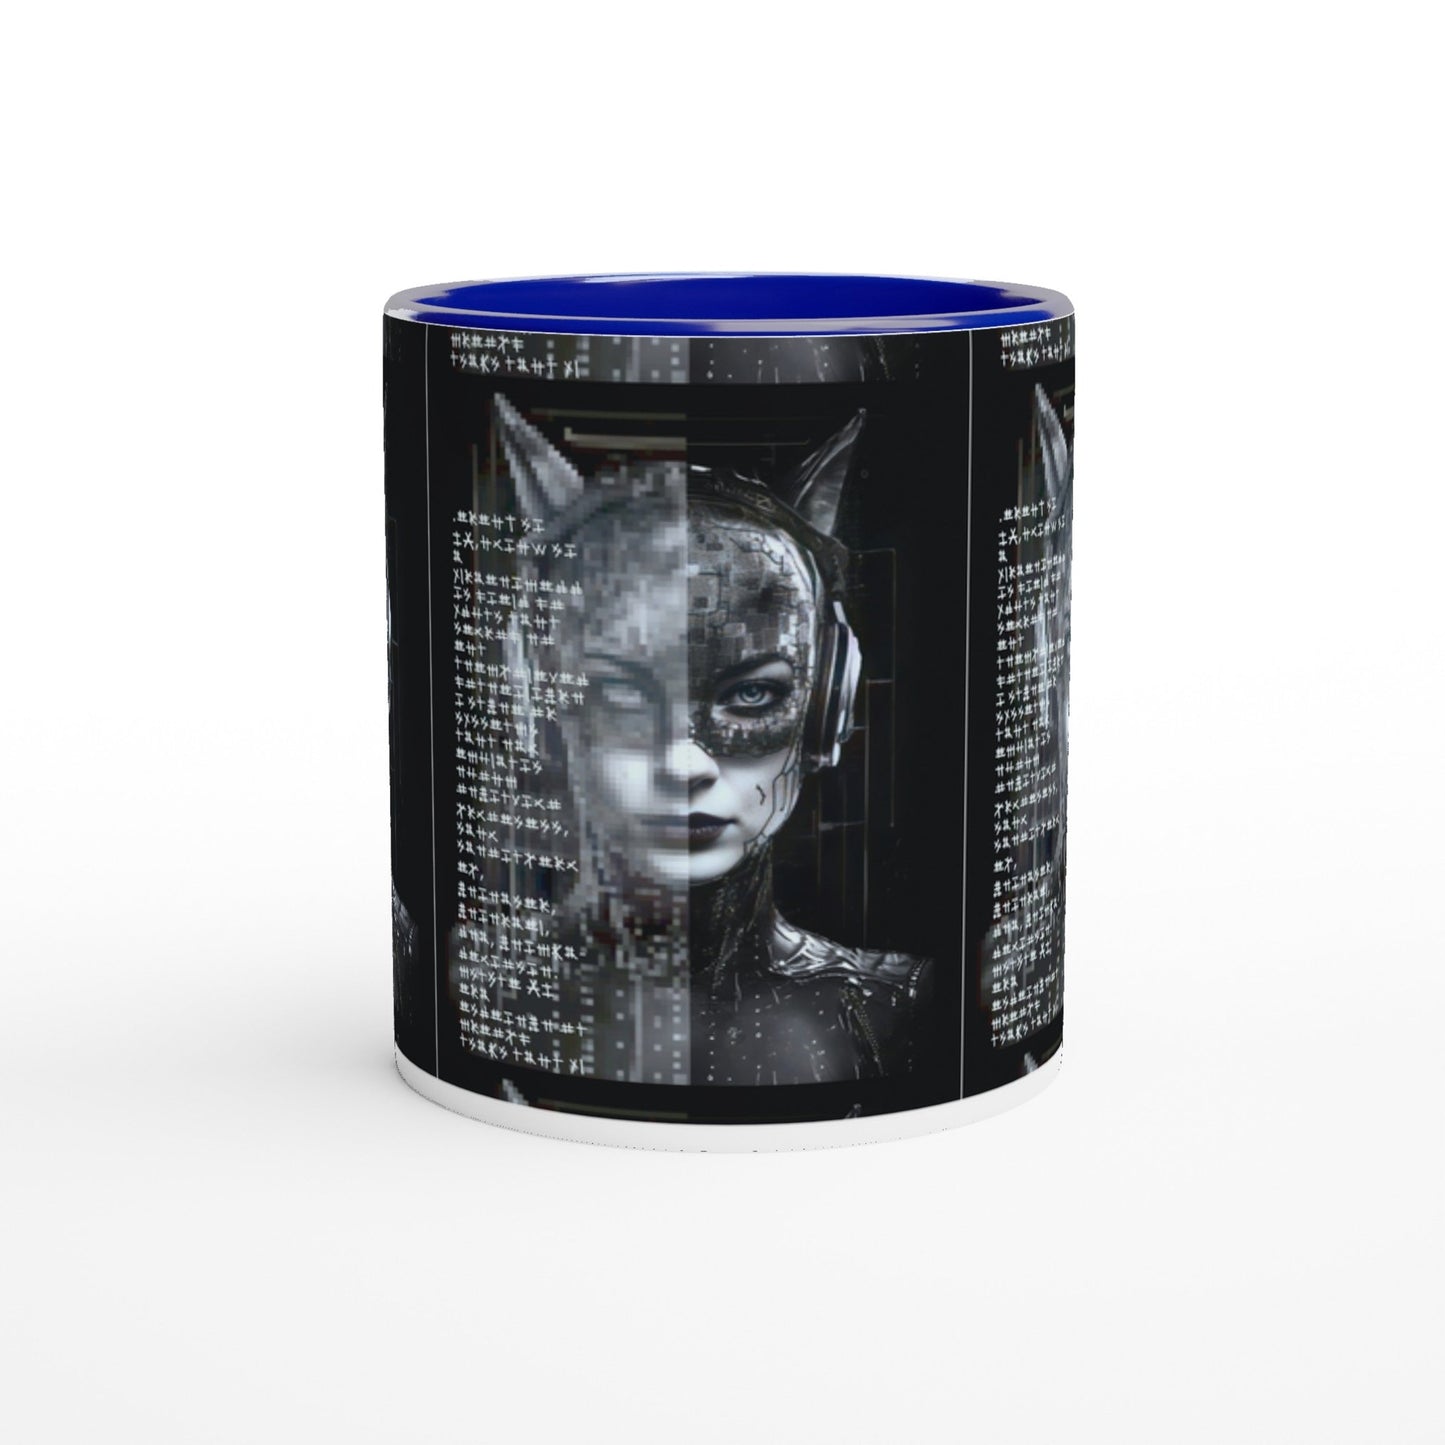 CAT WOMAN 2050 Mug with Color Inside - Rarileto